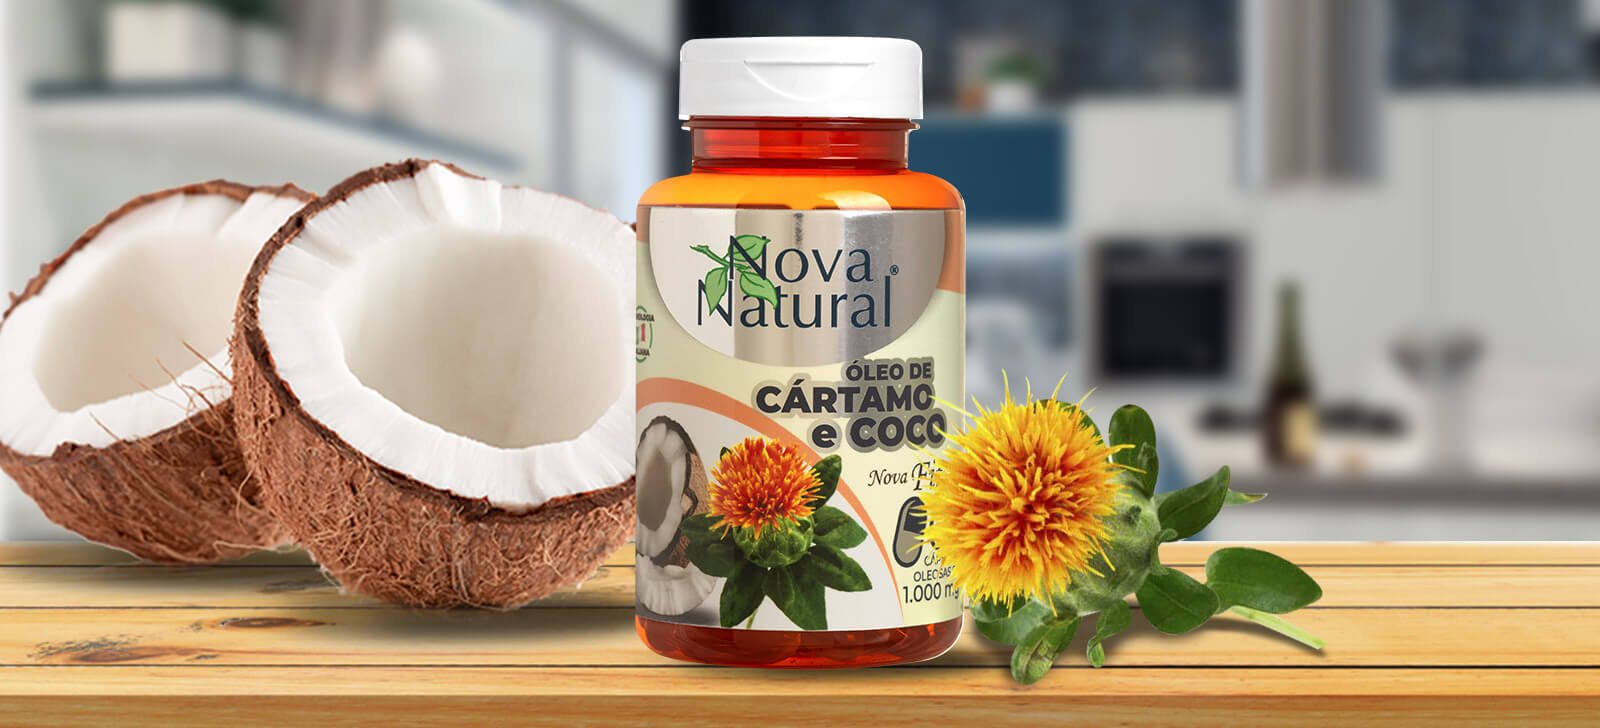 farmacia manipulacao campinas nova natural blog natureza magistral intestino oleo cartamo coco